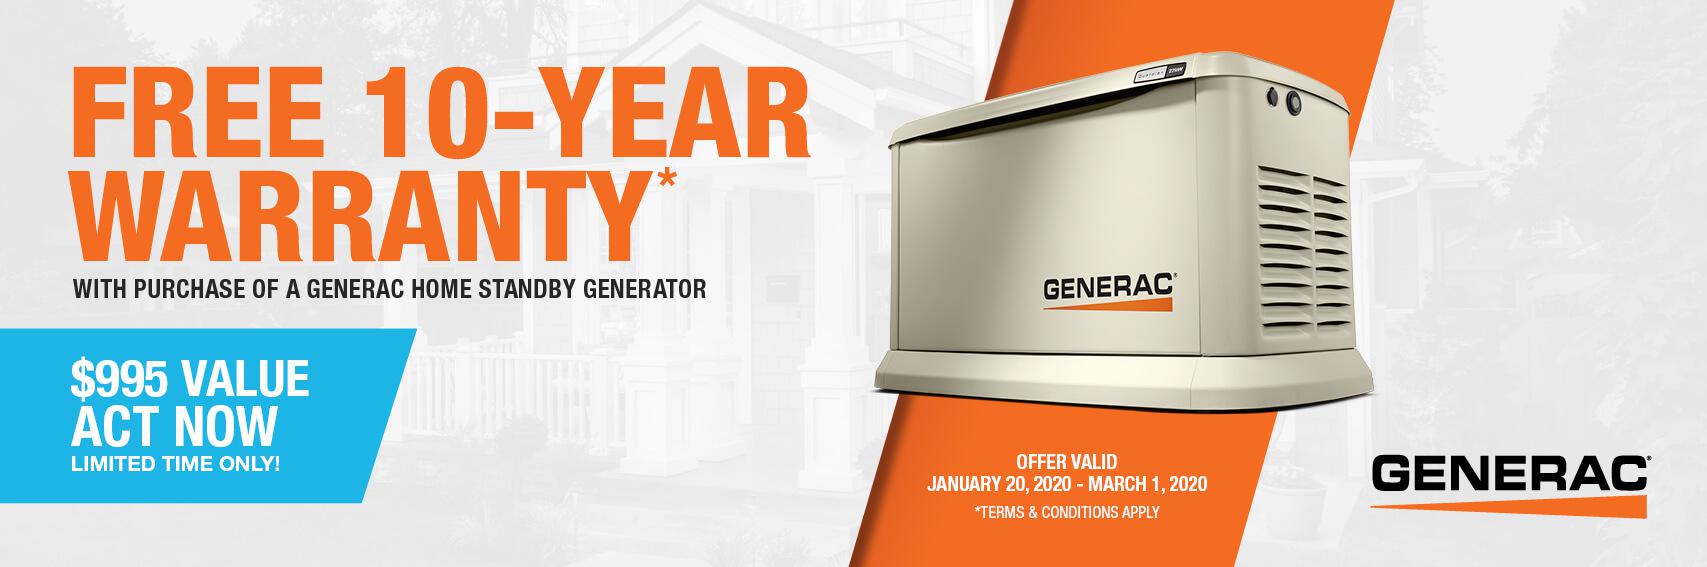 Homestandby Generator Deal | Warranty Offer | Generac Dealer | BLAIRSTOWN, NJ